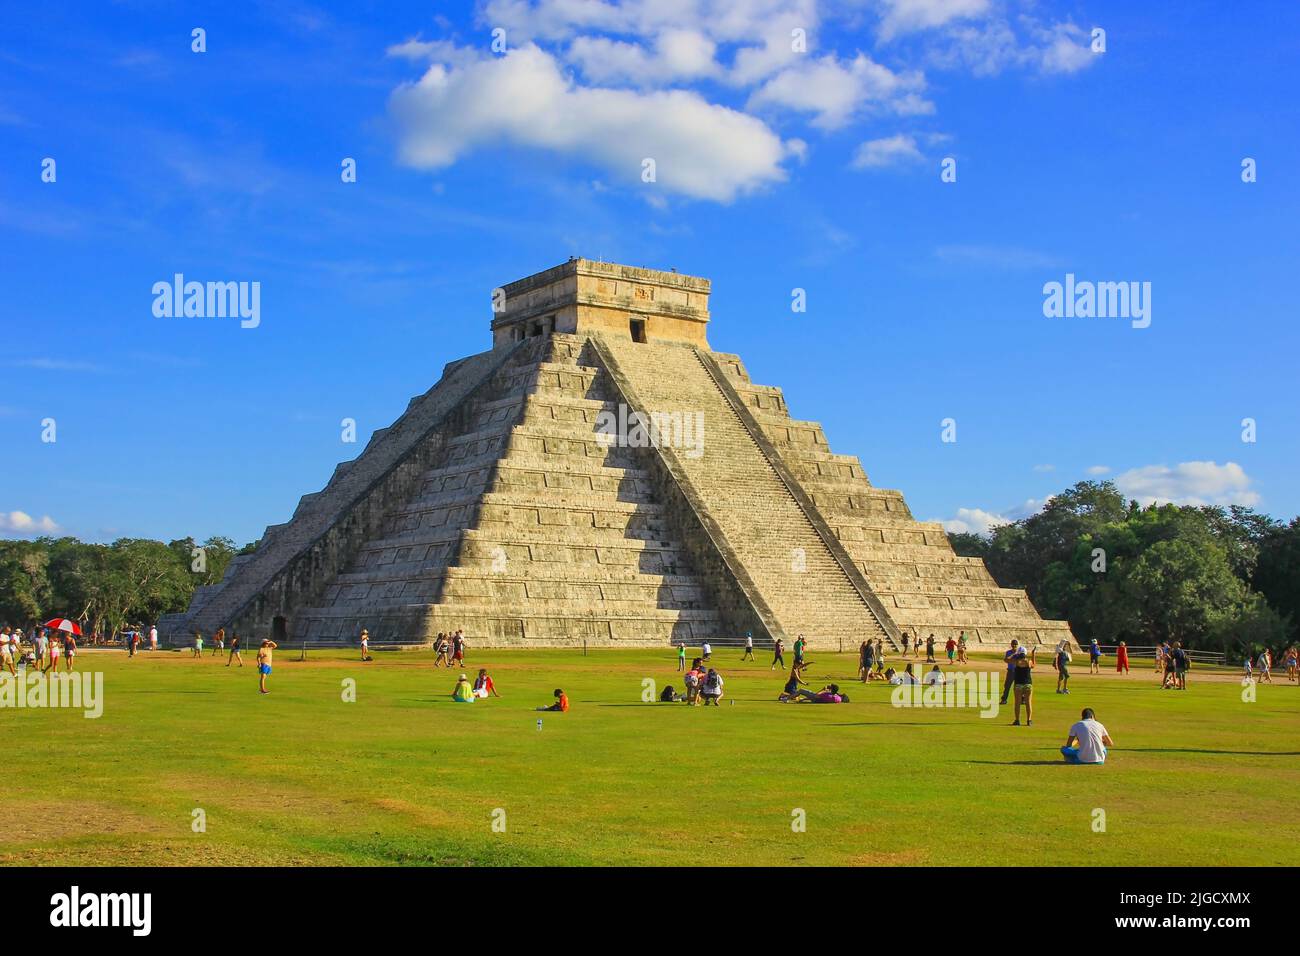 The main ancient Mayan civilization ruin is the Chichen Itza Pyramid or El Castillo castle or Kukulkan Pyramid.Mexico Stock Photo